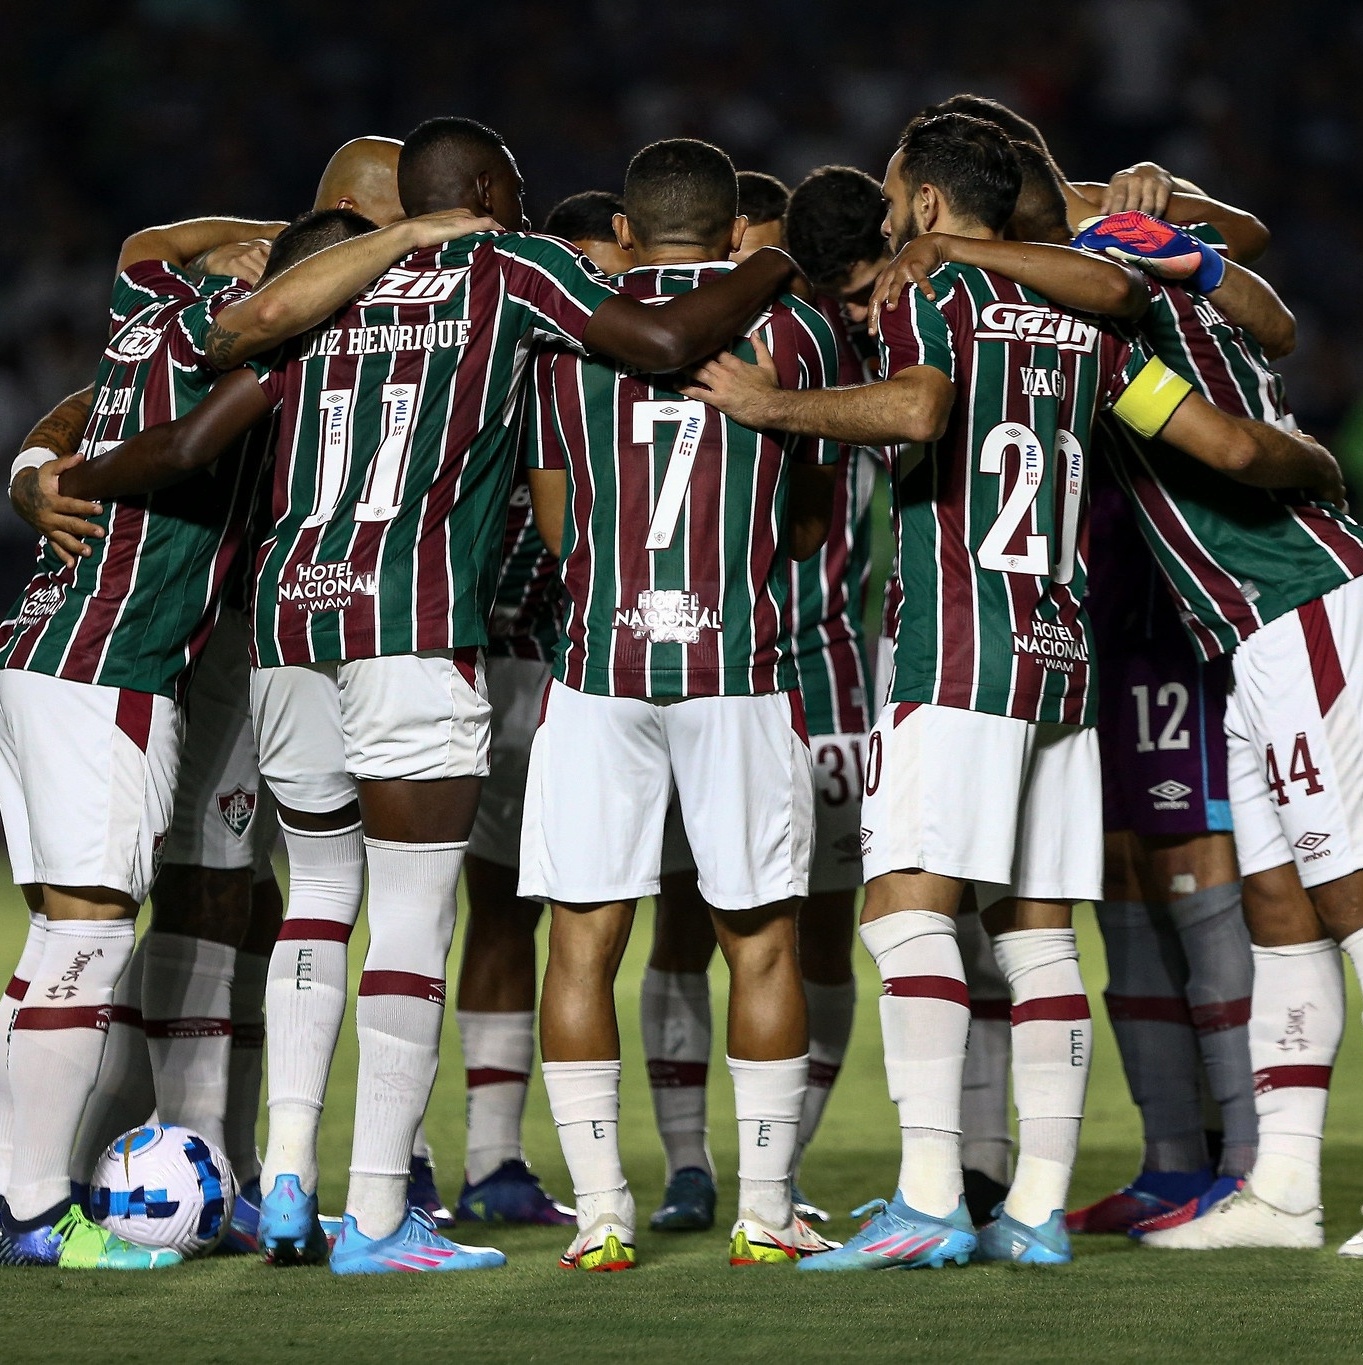 Fluminense bate Avaí e dá salto na classificação do Brasileiro